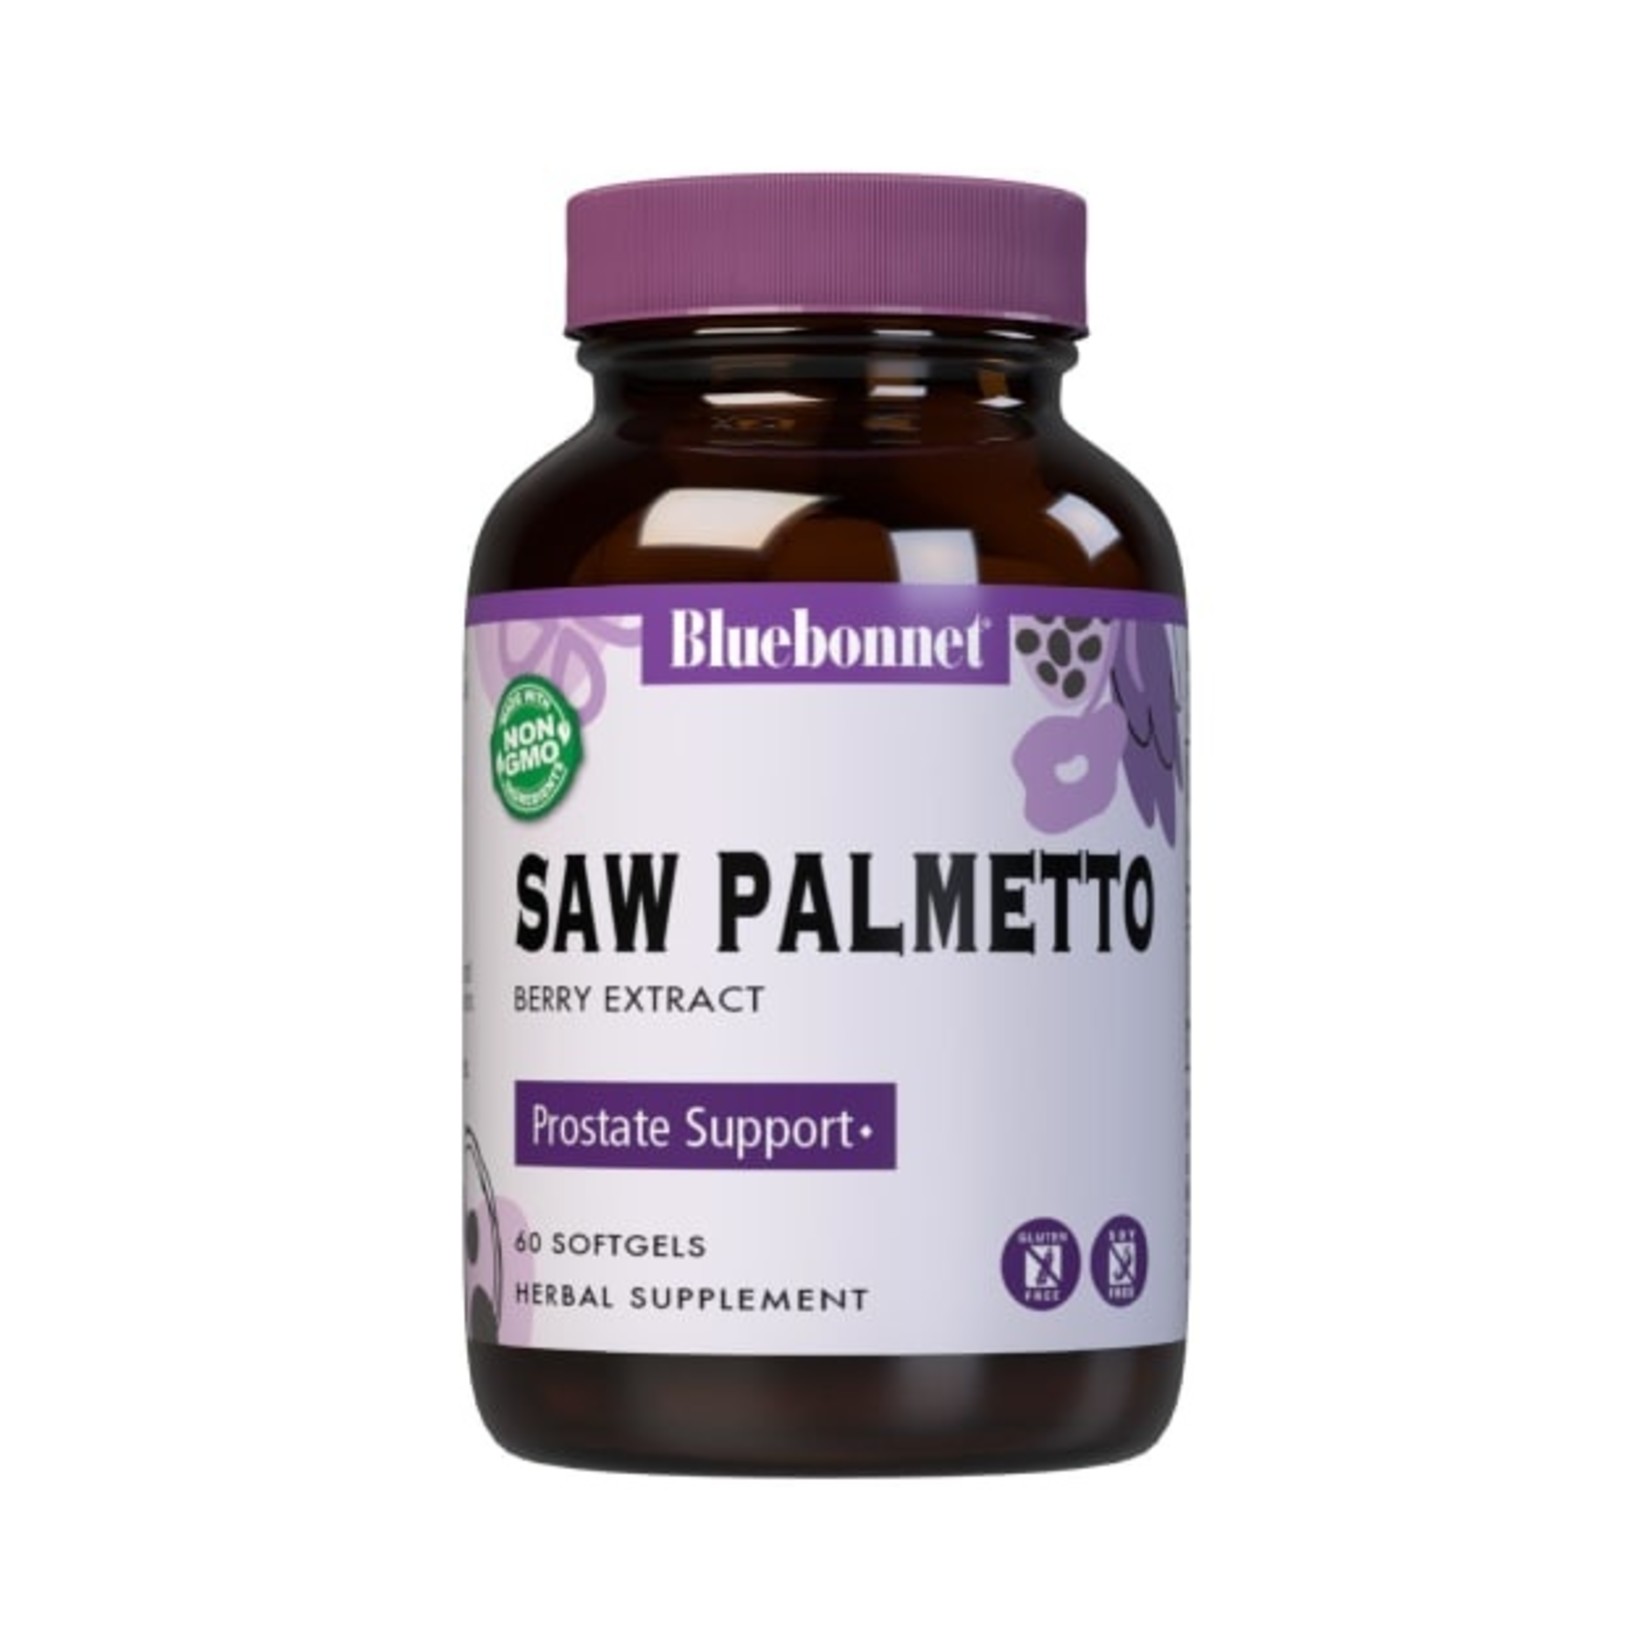 Bluebonnet Bluebonnet - Saw Palmetto Berry Extract - 60 Softgels